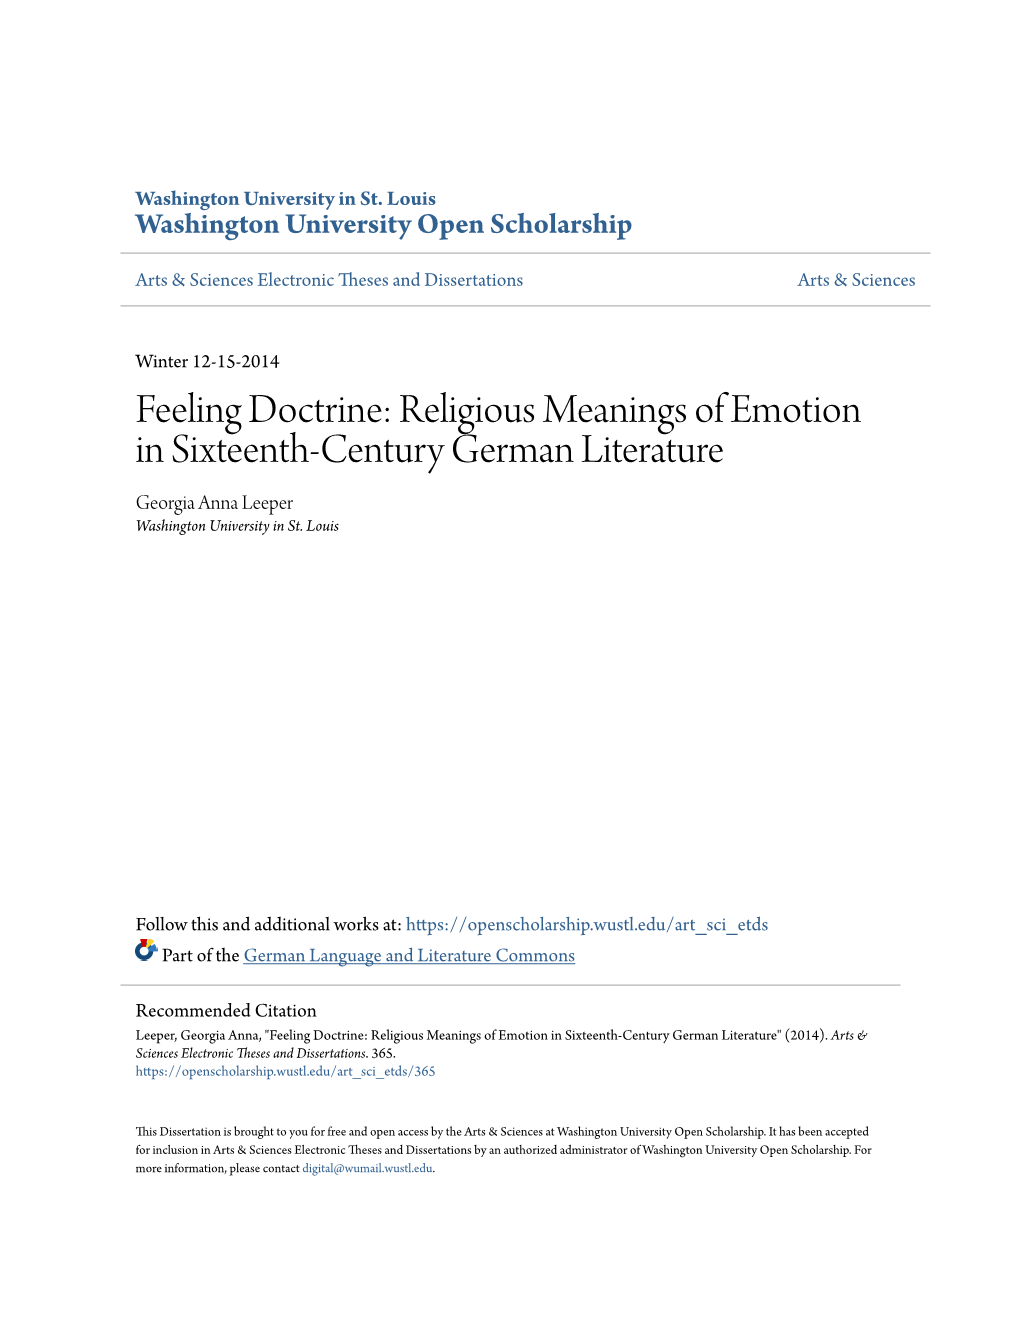 Religious Meanings of Emotion in Sixteenth-Century German Literature Georgia Anna Leeper Washington University in St